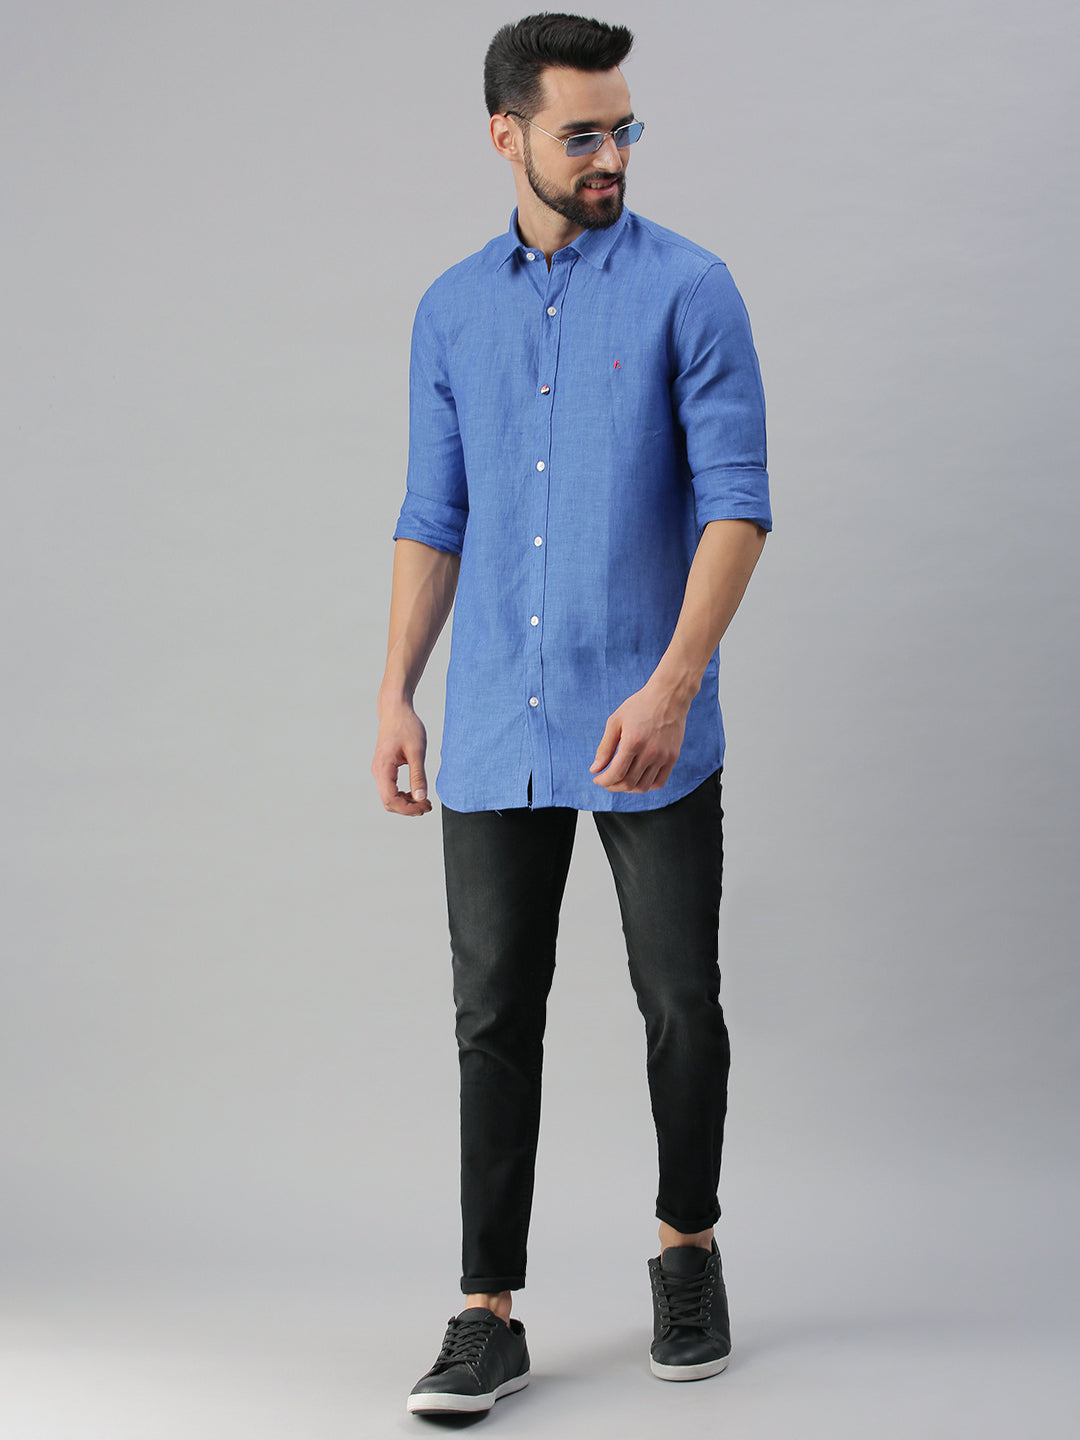 H&M Divided Denim Shirt Mens Medium Long Sleeve Button Up Blue Western |  eBay